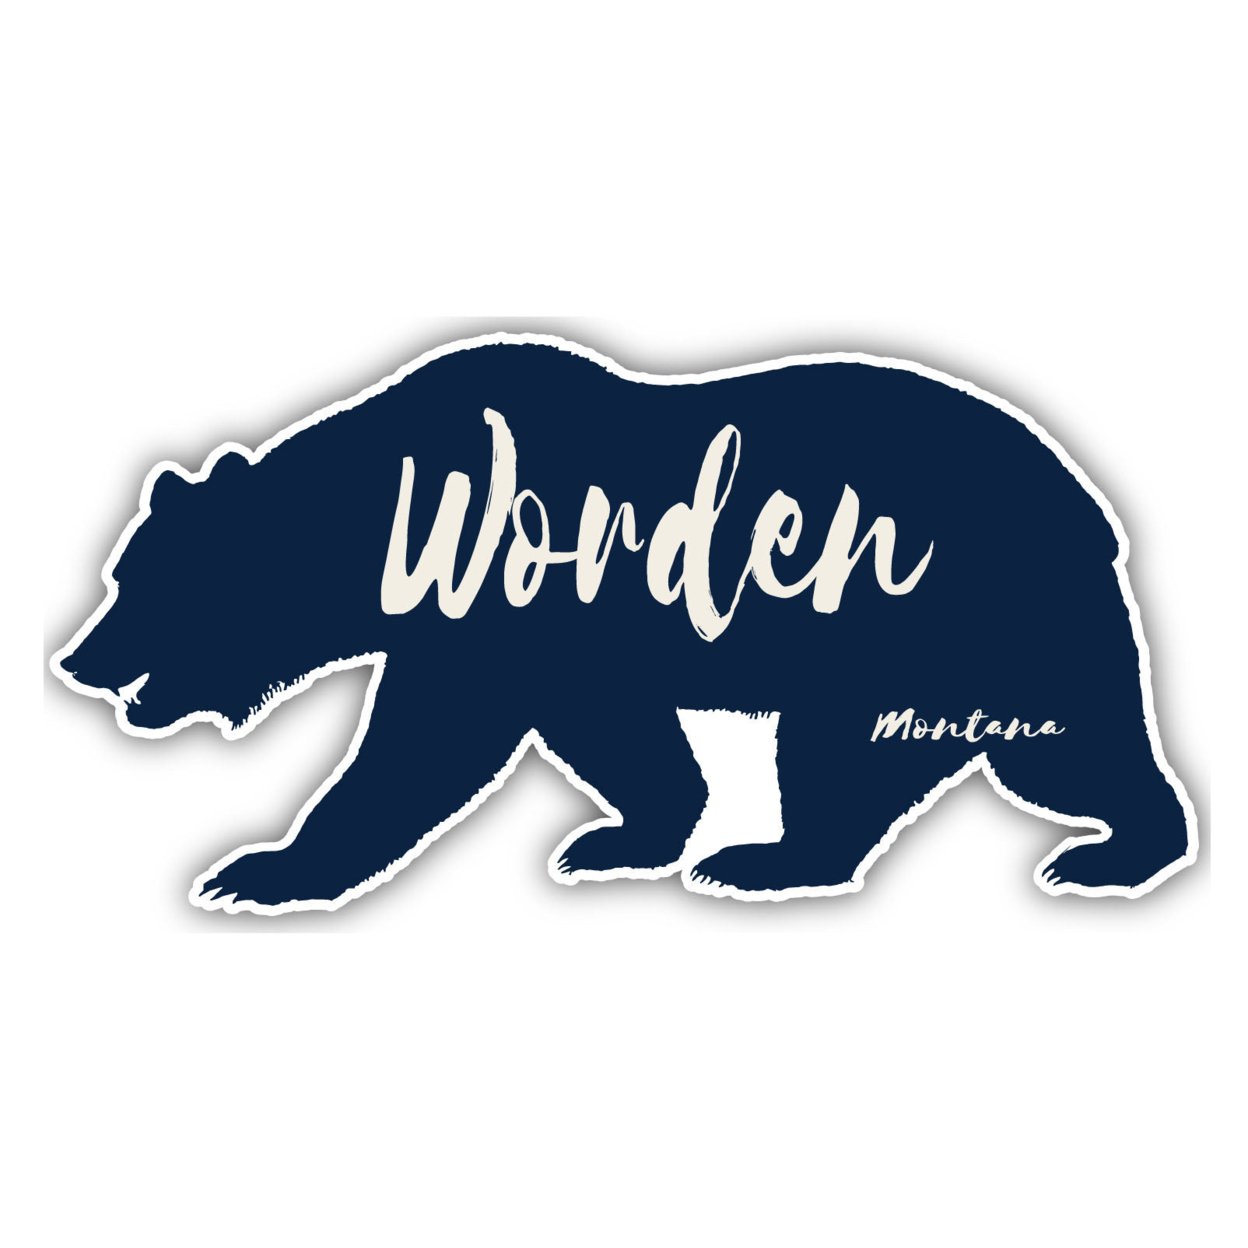 Worden Montana Souvenir Decorative Stickers (Choose Theme And Size) - Single Unit, 2-Inch, Bear